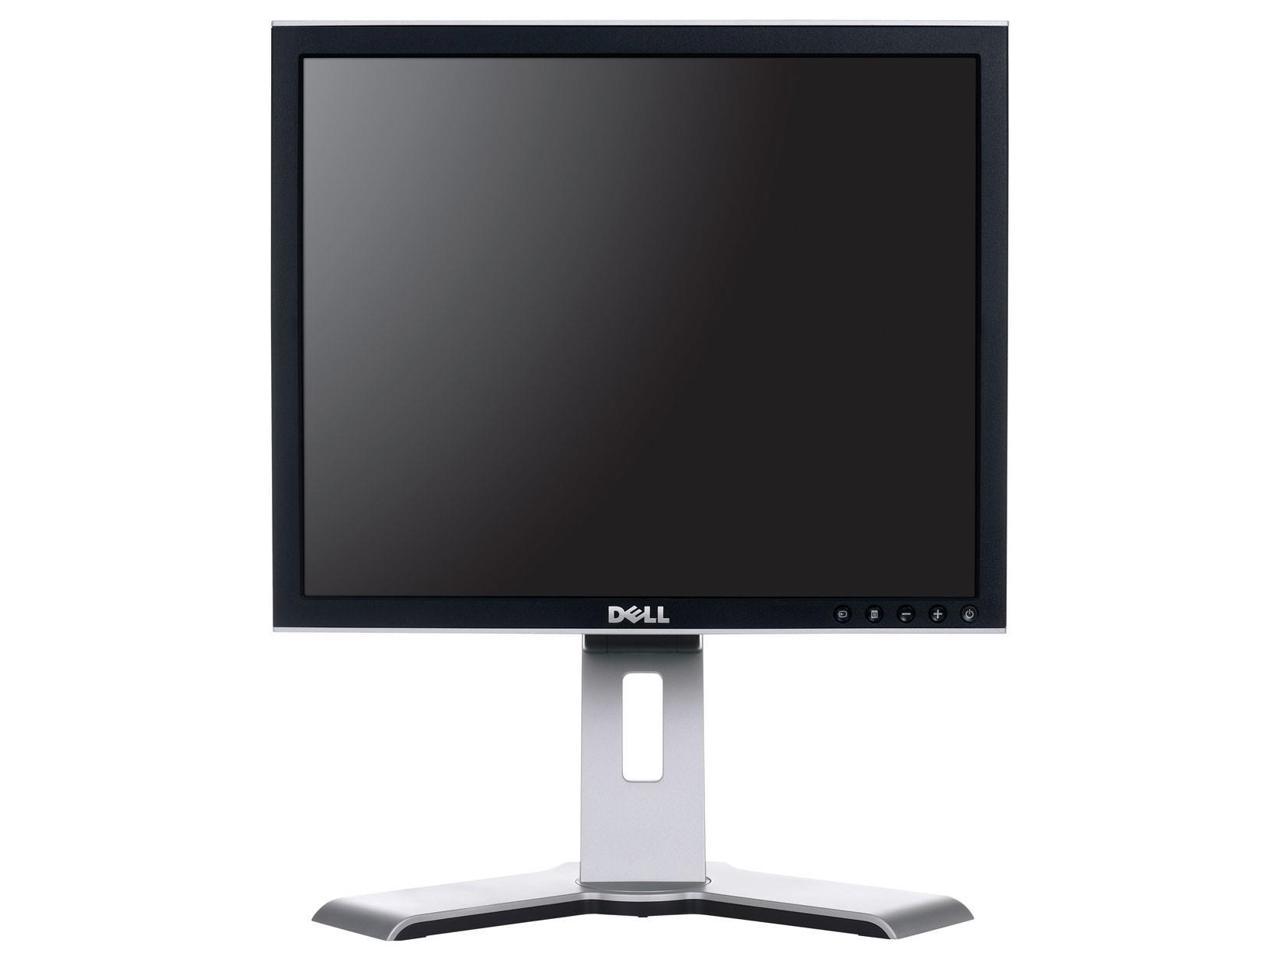 Dell UltraSharp 17" LCD Monitor 1707FP 4-Port USB Hub VGA DVI CC352 CC280 YG613 